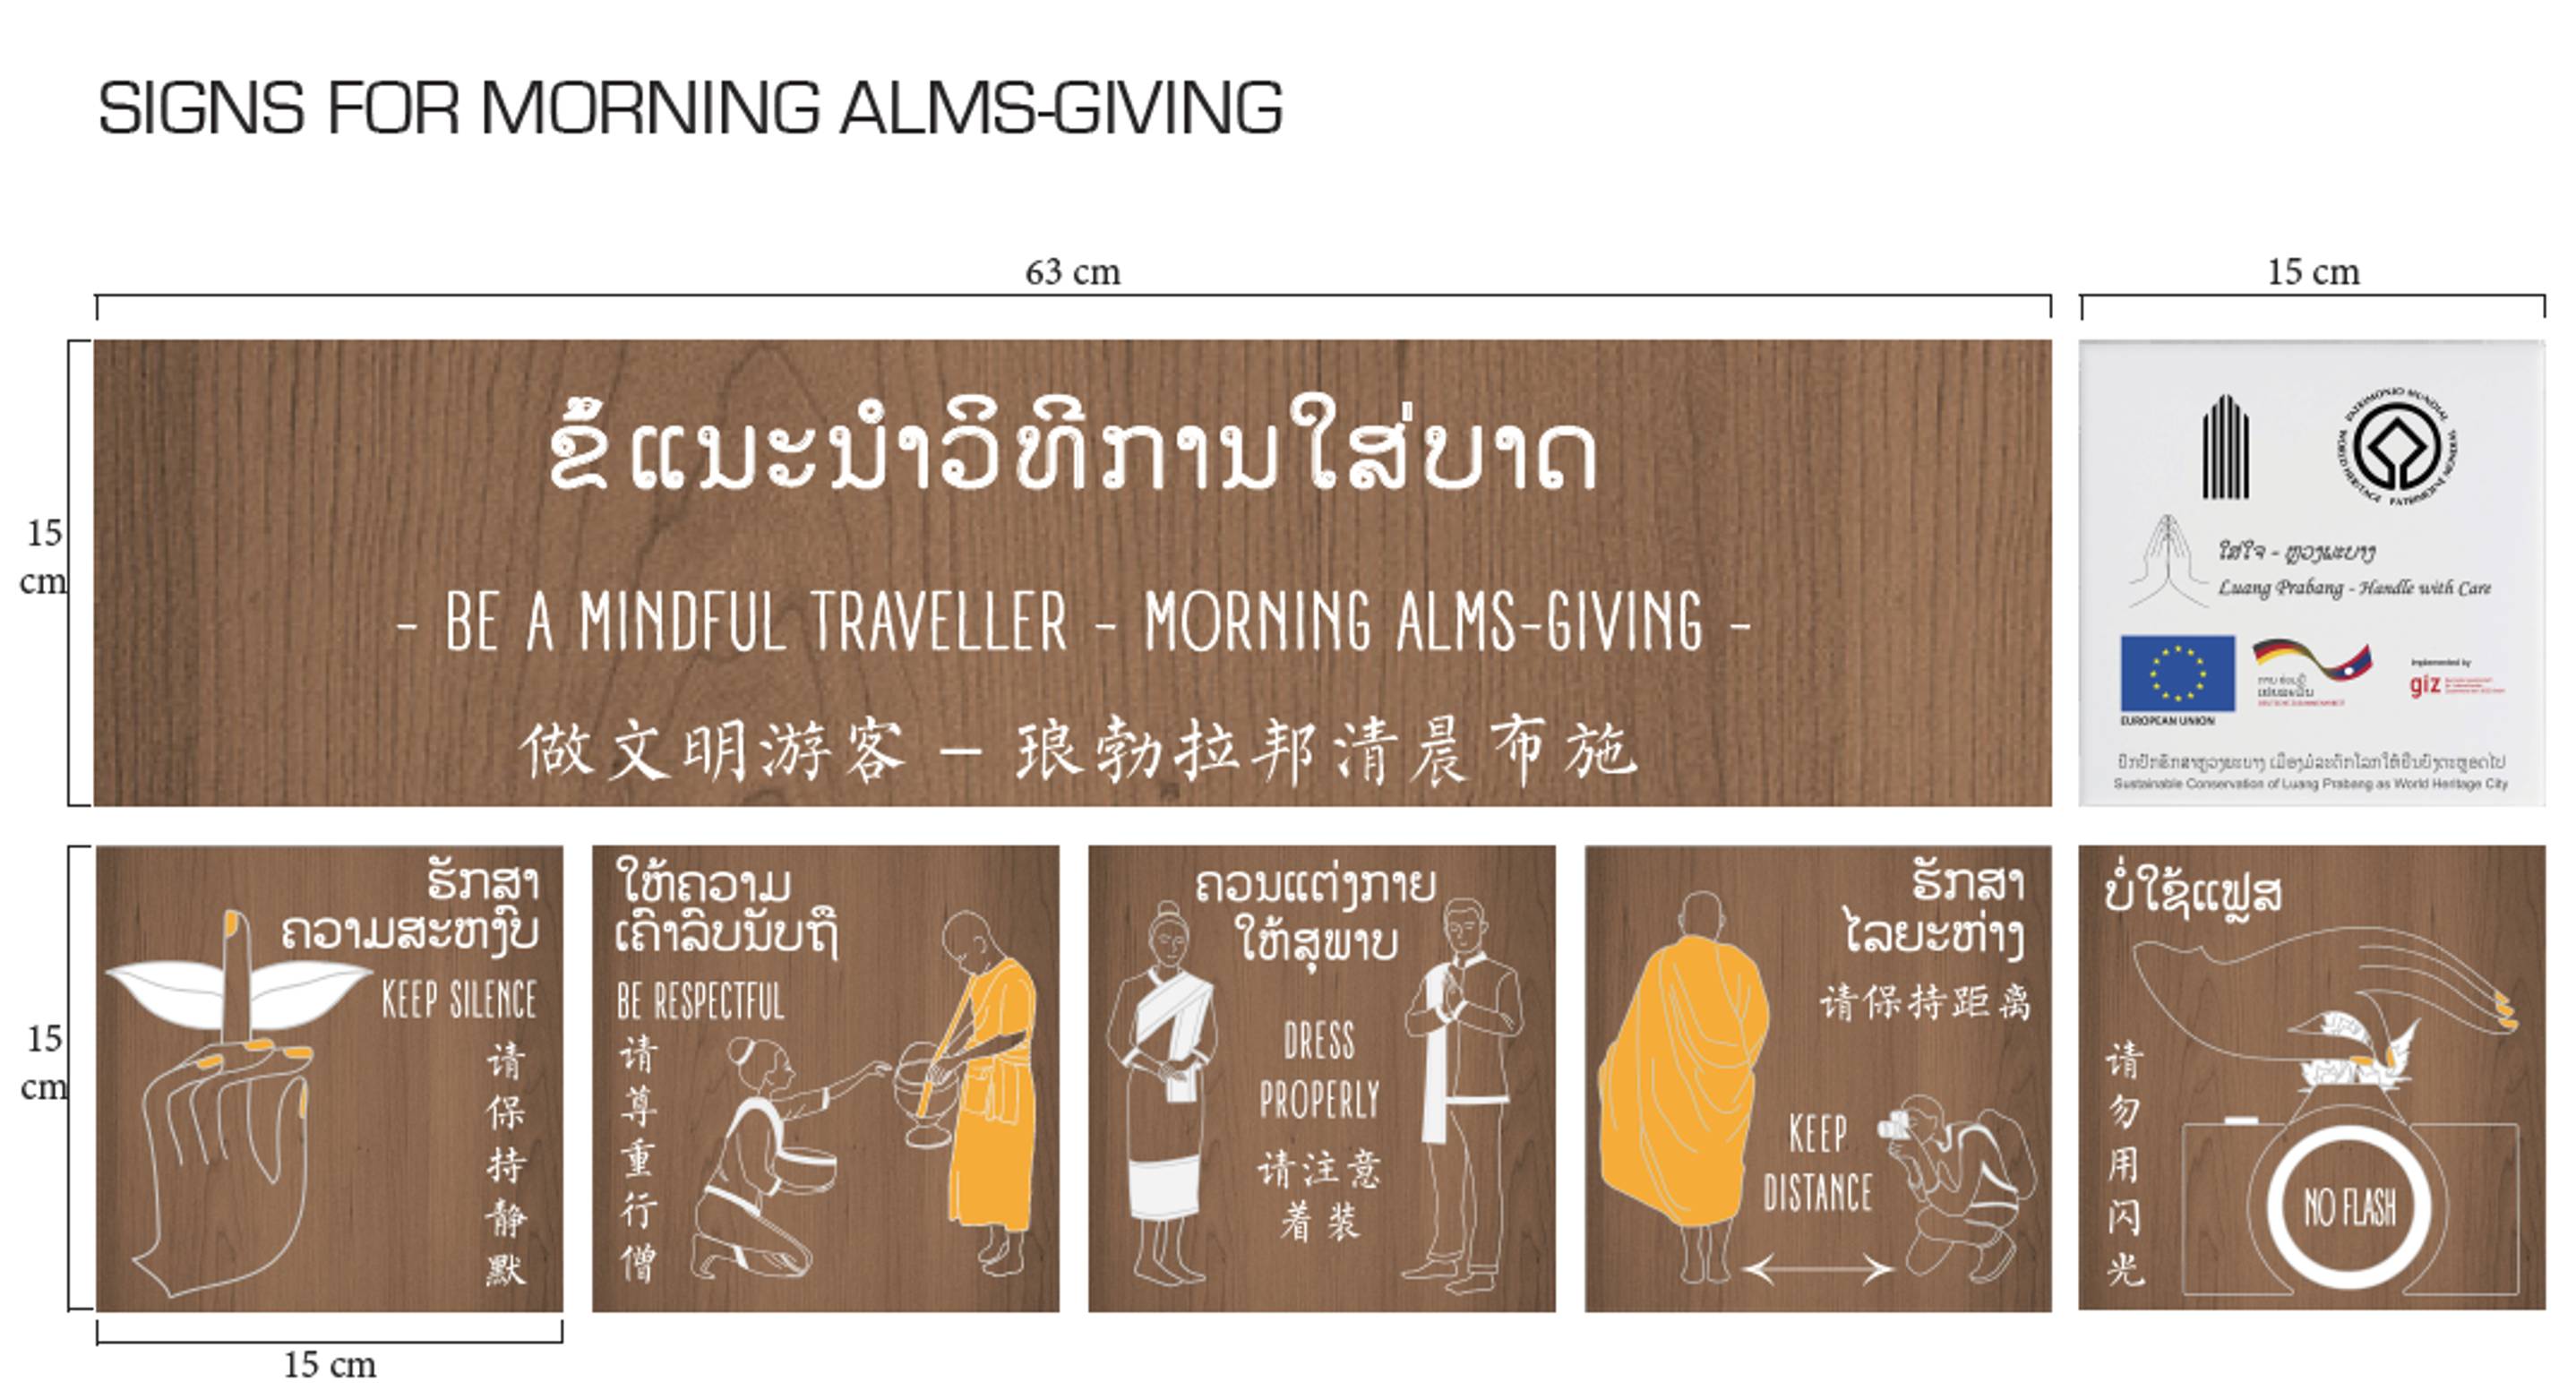 Luang Prabang Handle With Care